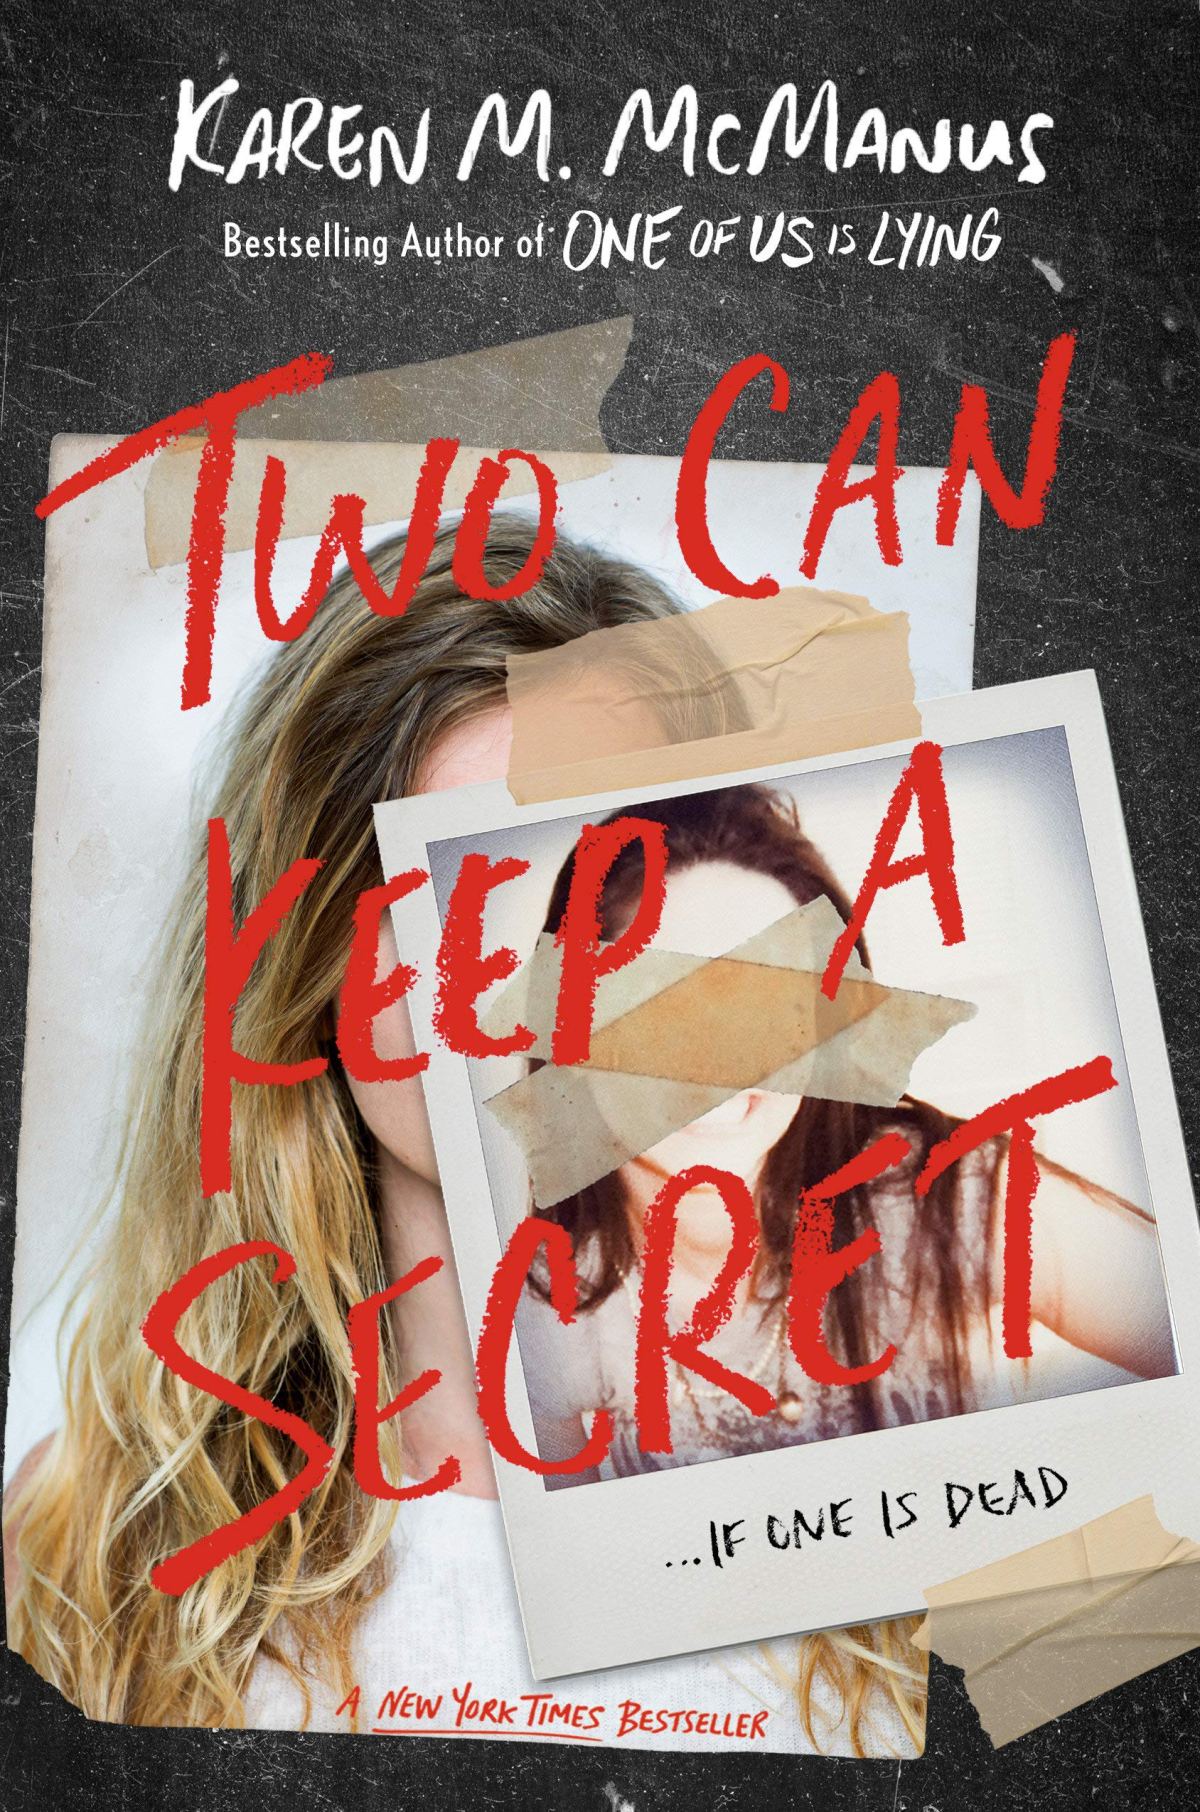 Book 12 – Two Can Keep A Secret by Karen M. McManus